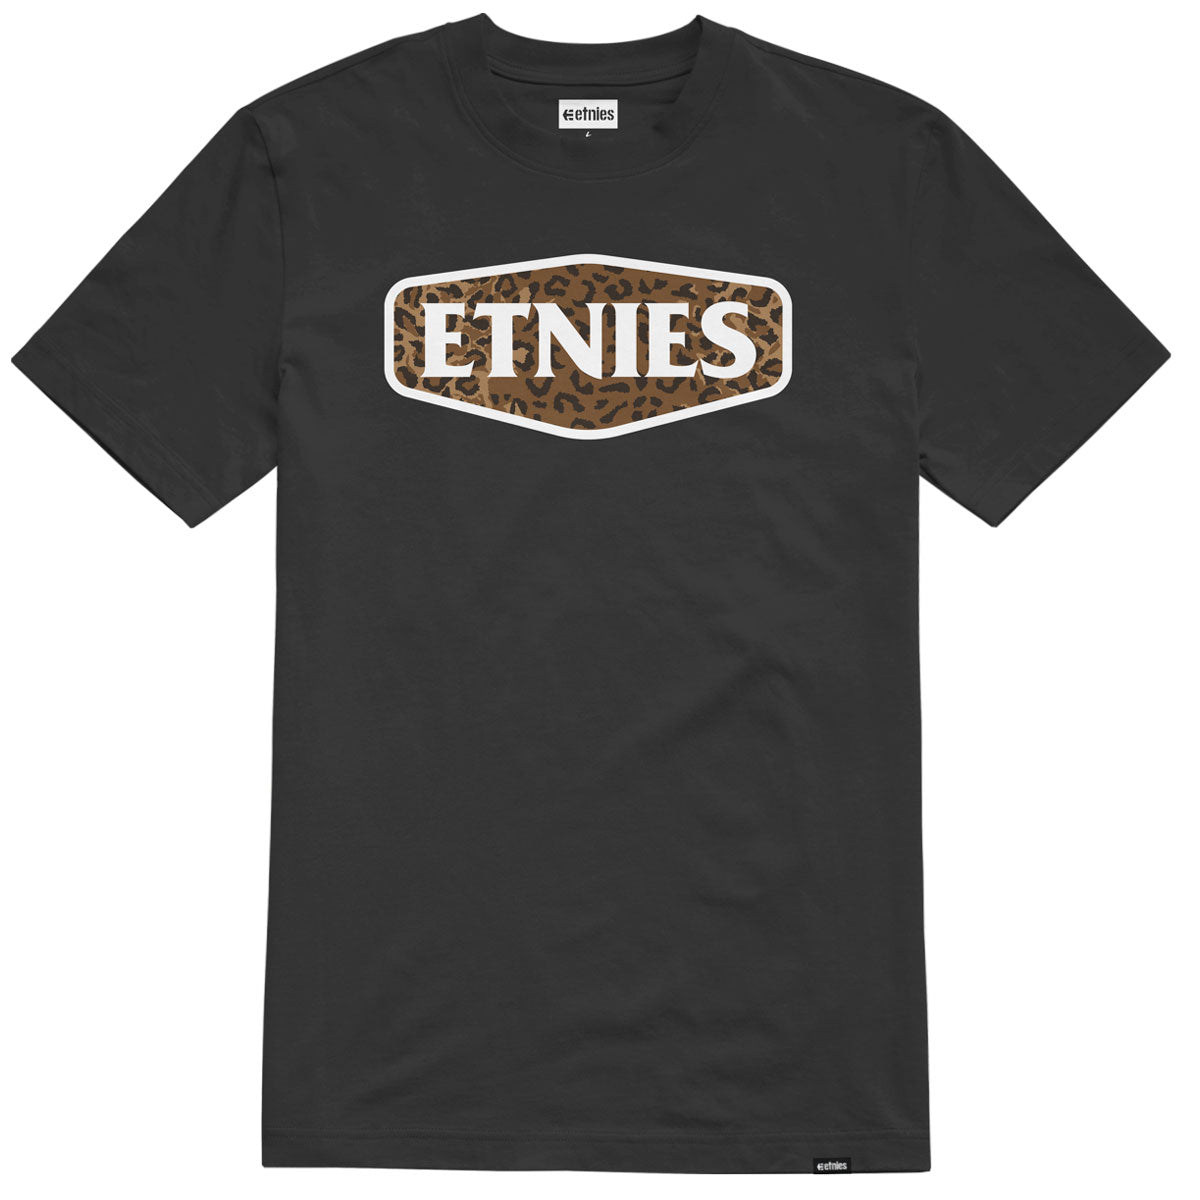 Etnies Dystopia Fill T-Shirt - Black/Brown image 1